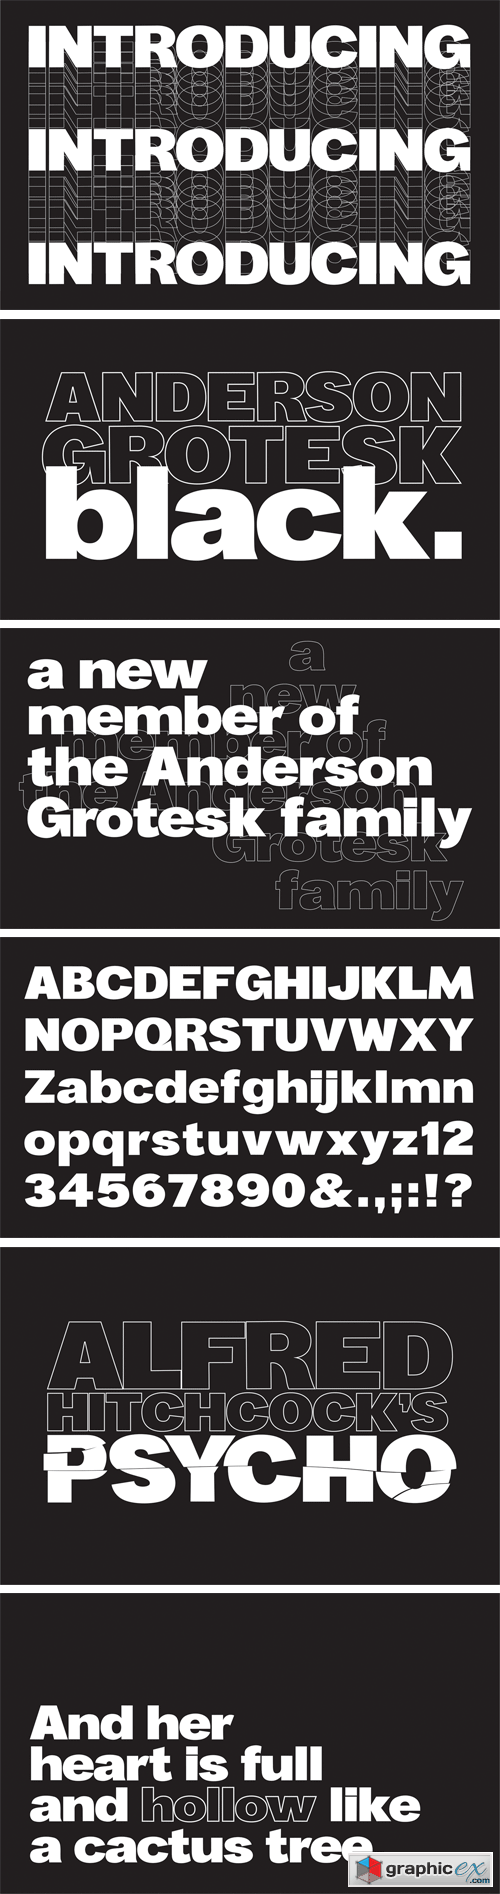 Anderson Grotesk Black Typeface